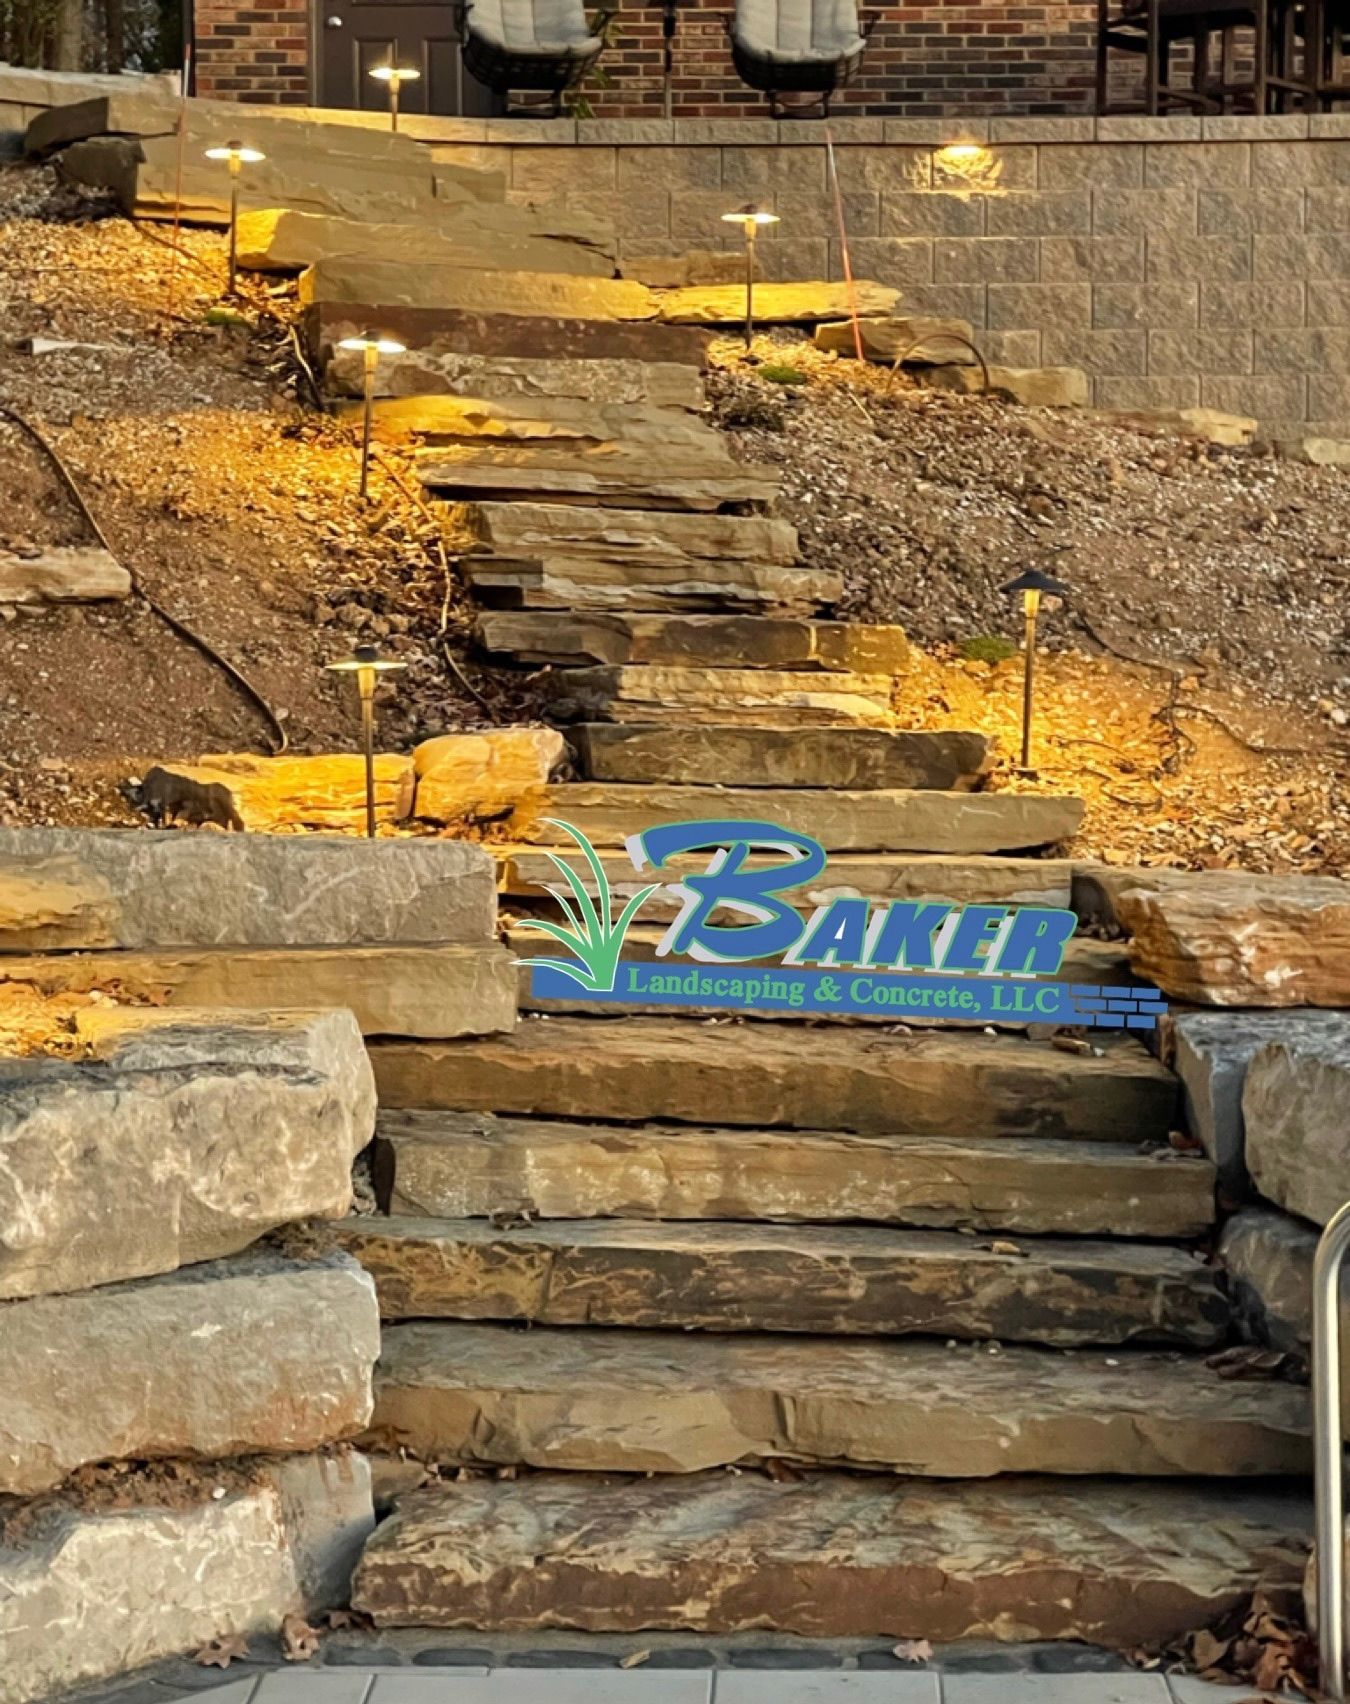 Stone Steps Creation - St. Louis, MO - Baker Landscaping & Concrete, LLC